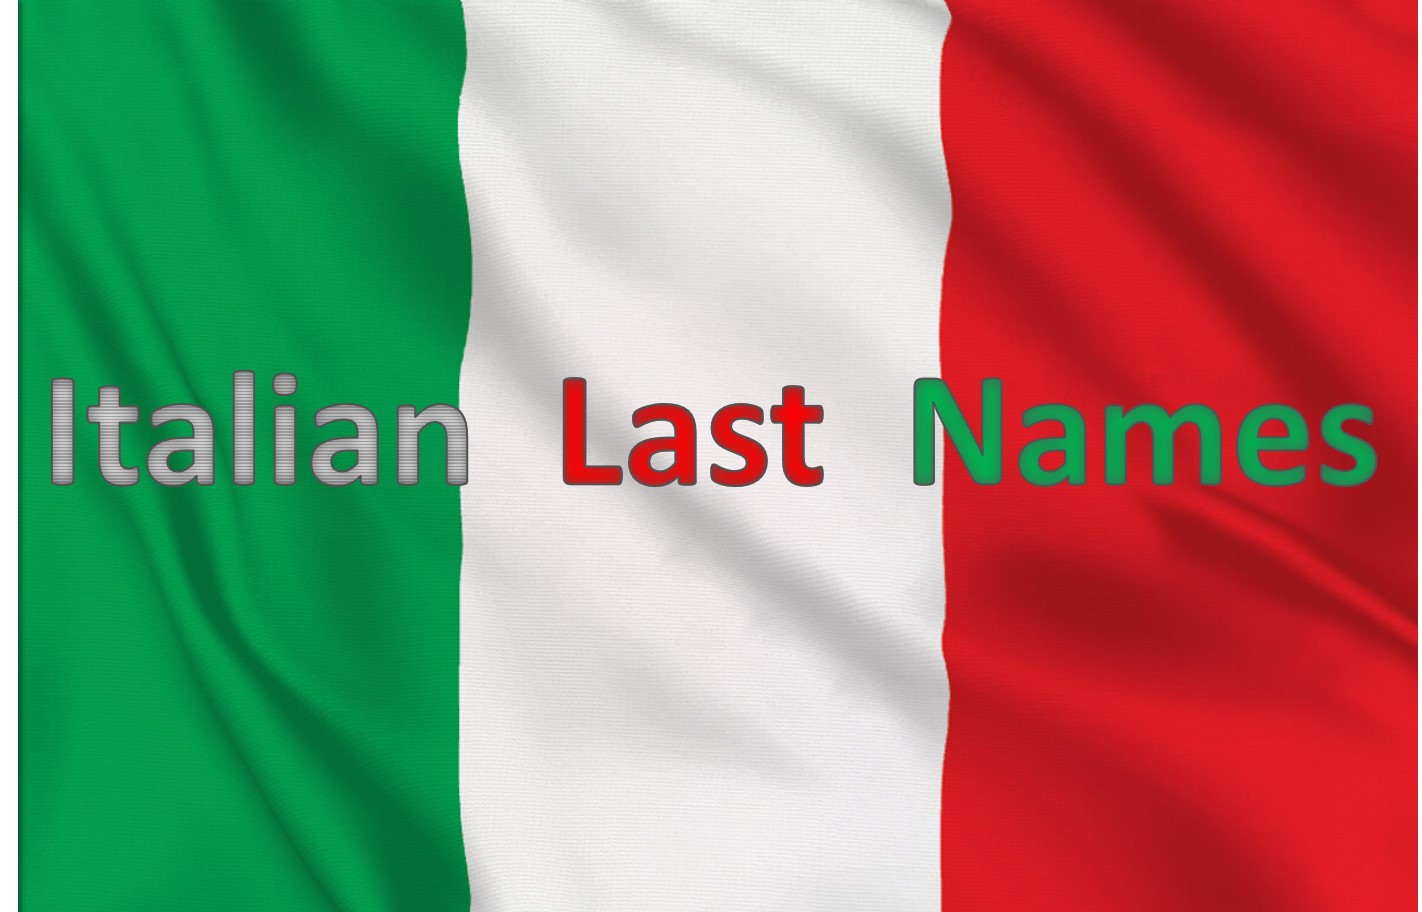 Italian-last-names by region